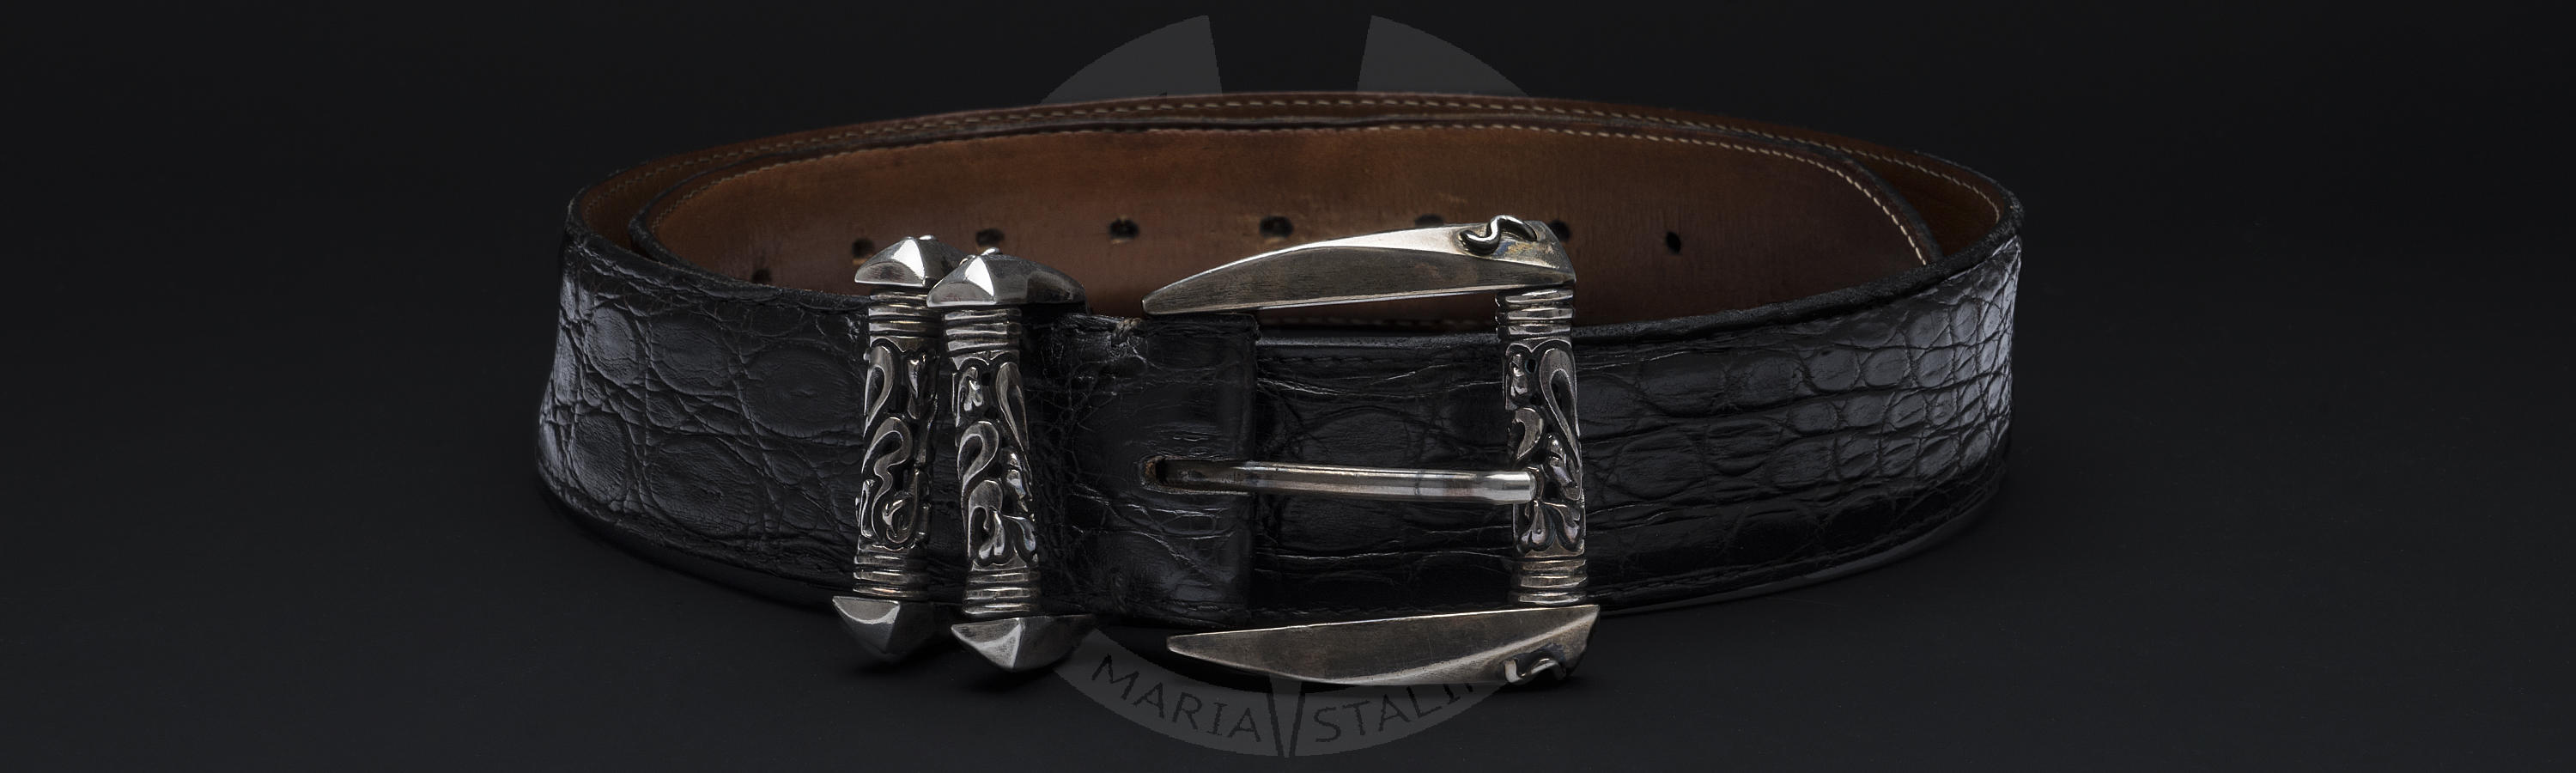 Crocodile leather belt